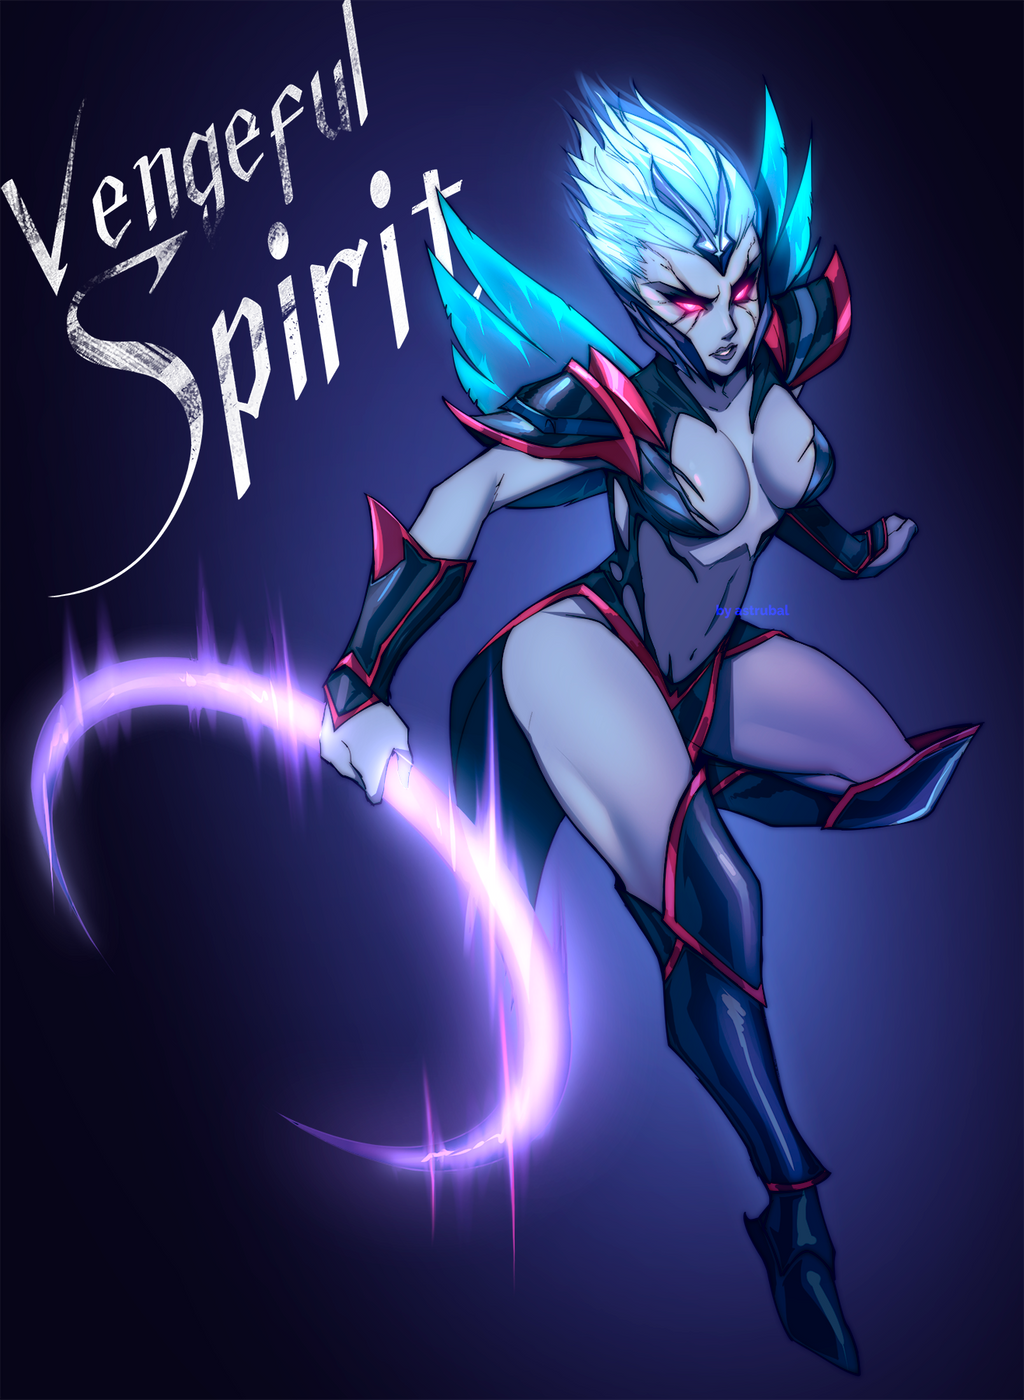 Vengeful Spirit by AstrubalArt on DeviantArt